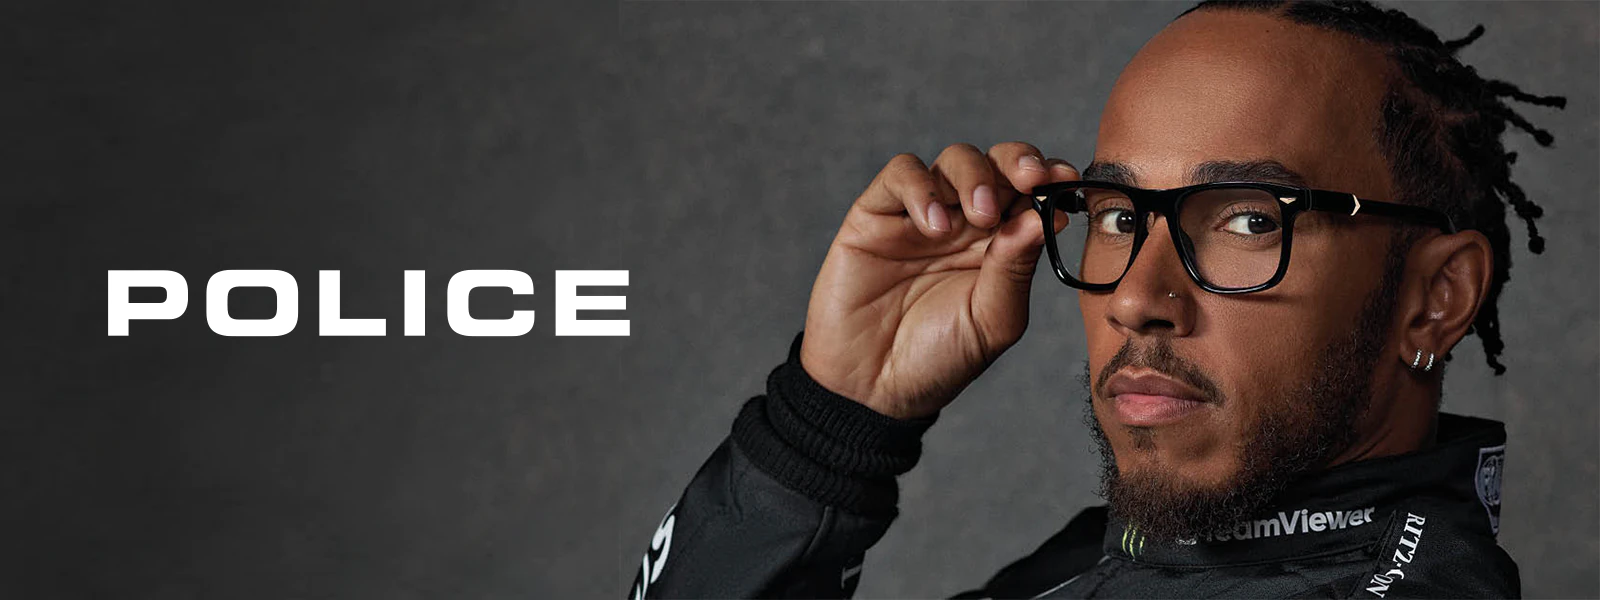 Famoso corredor de fórmula um, Lewis Hamilton, a segurar os óculos que utiliza